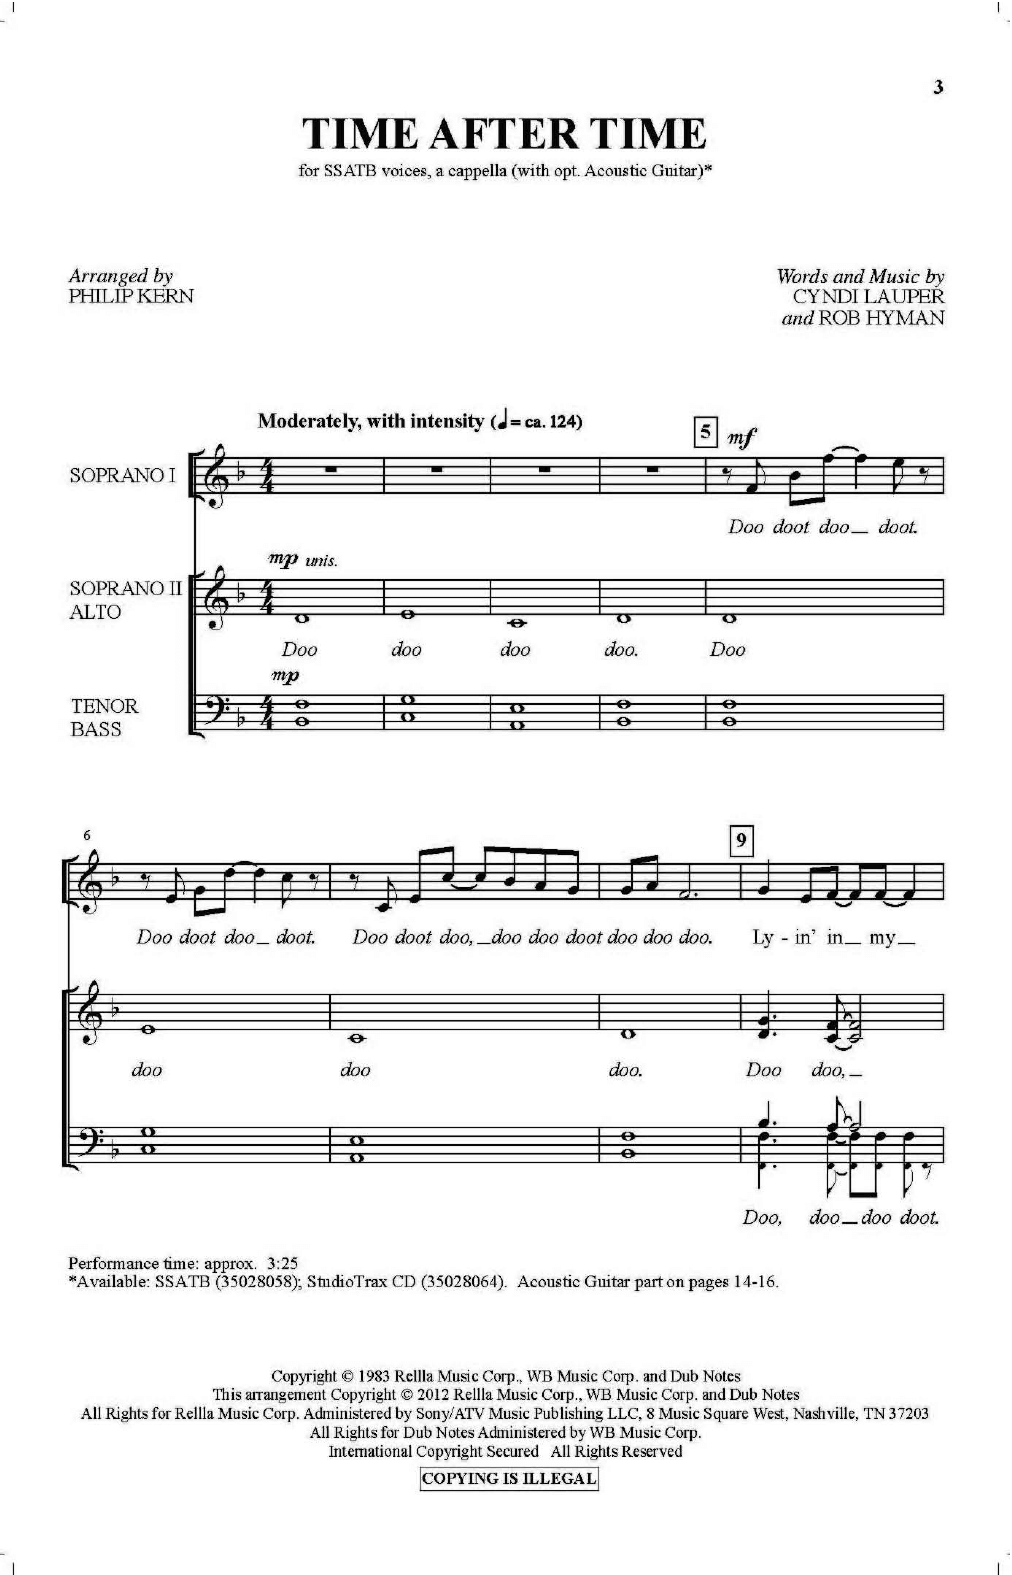 Time After Time (arr. Philip Kern) (SATB Choir) von Cyndi Lauper